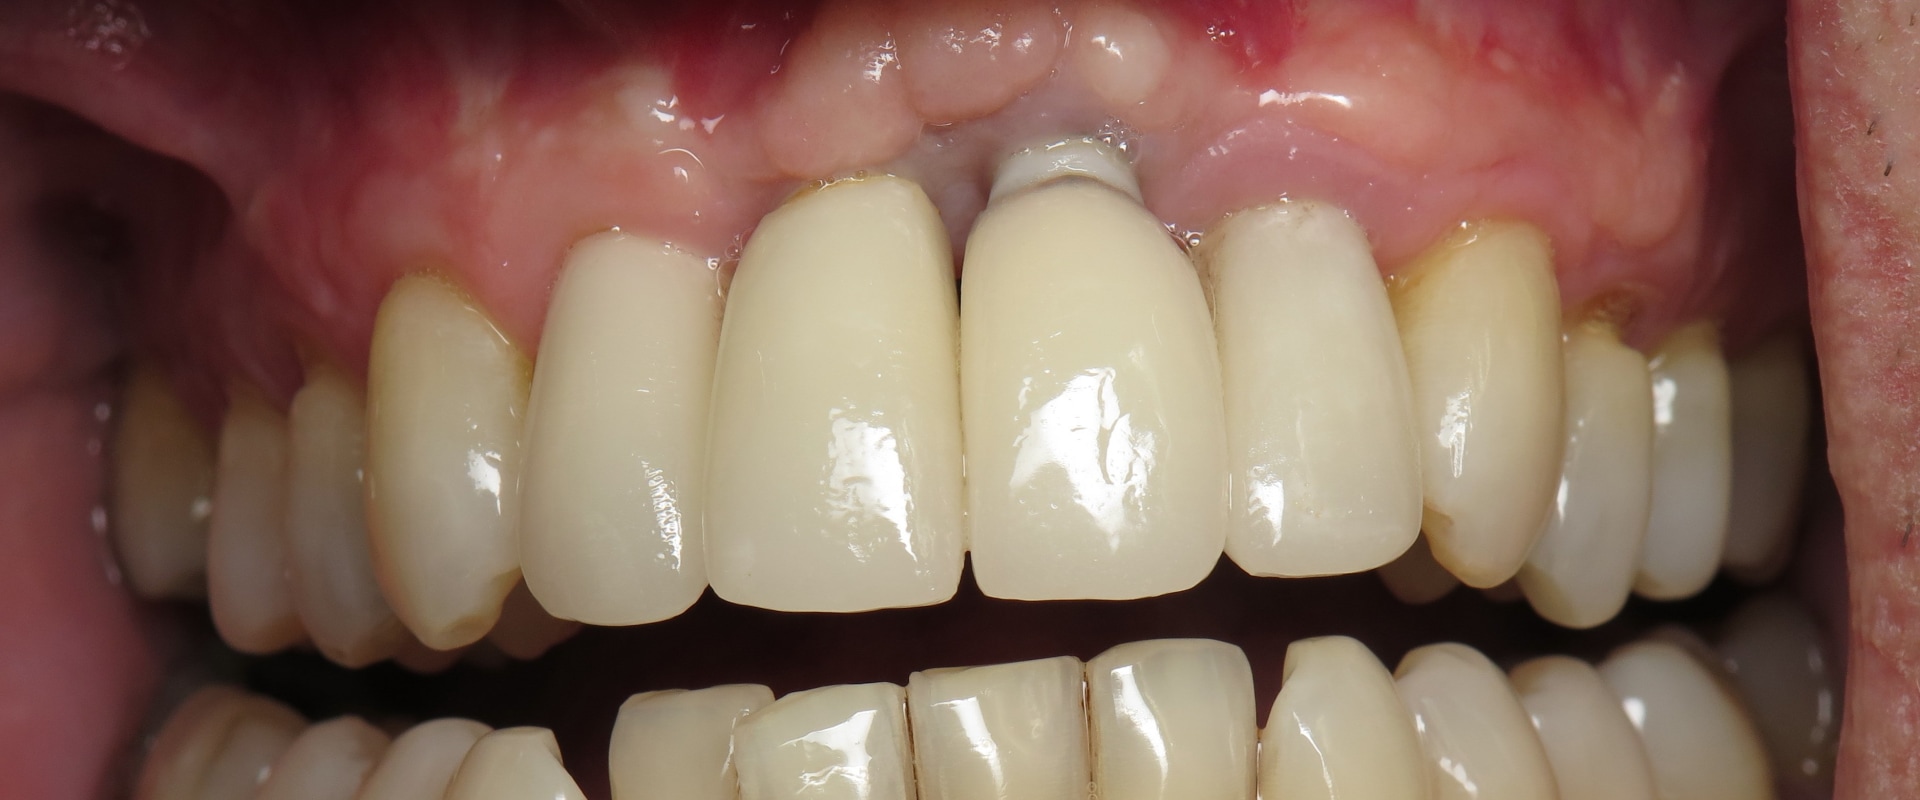 When dental implants don't work?